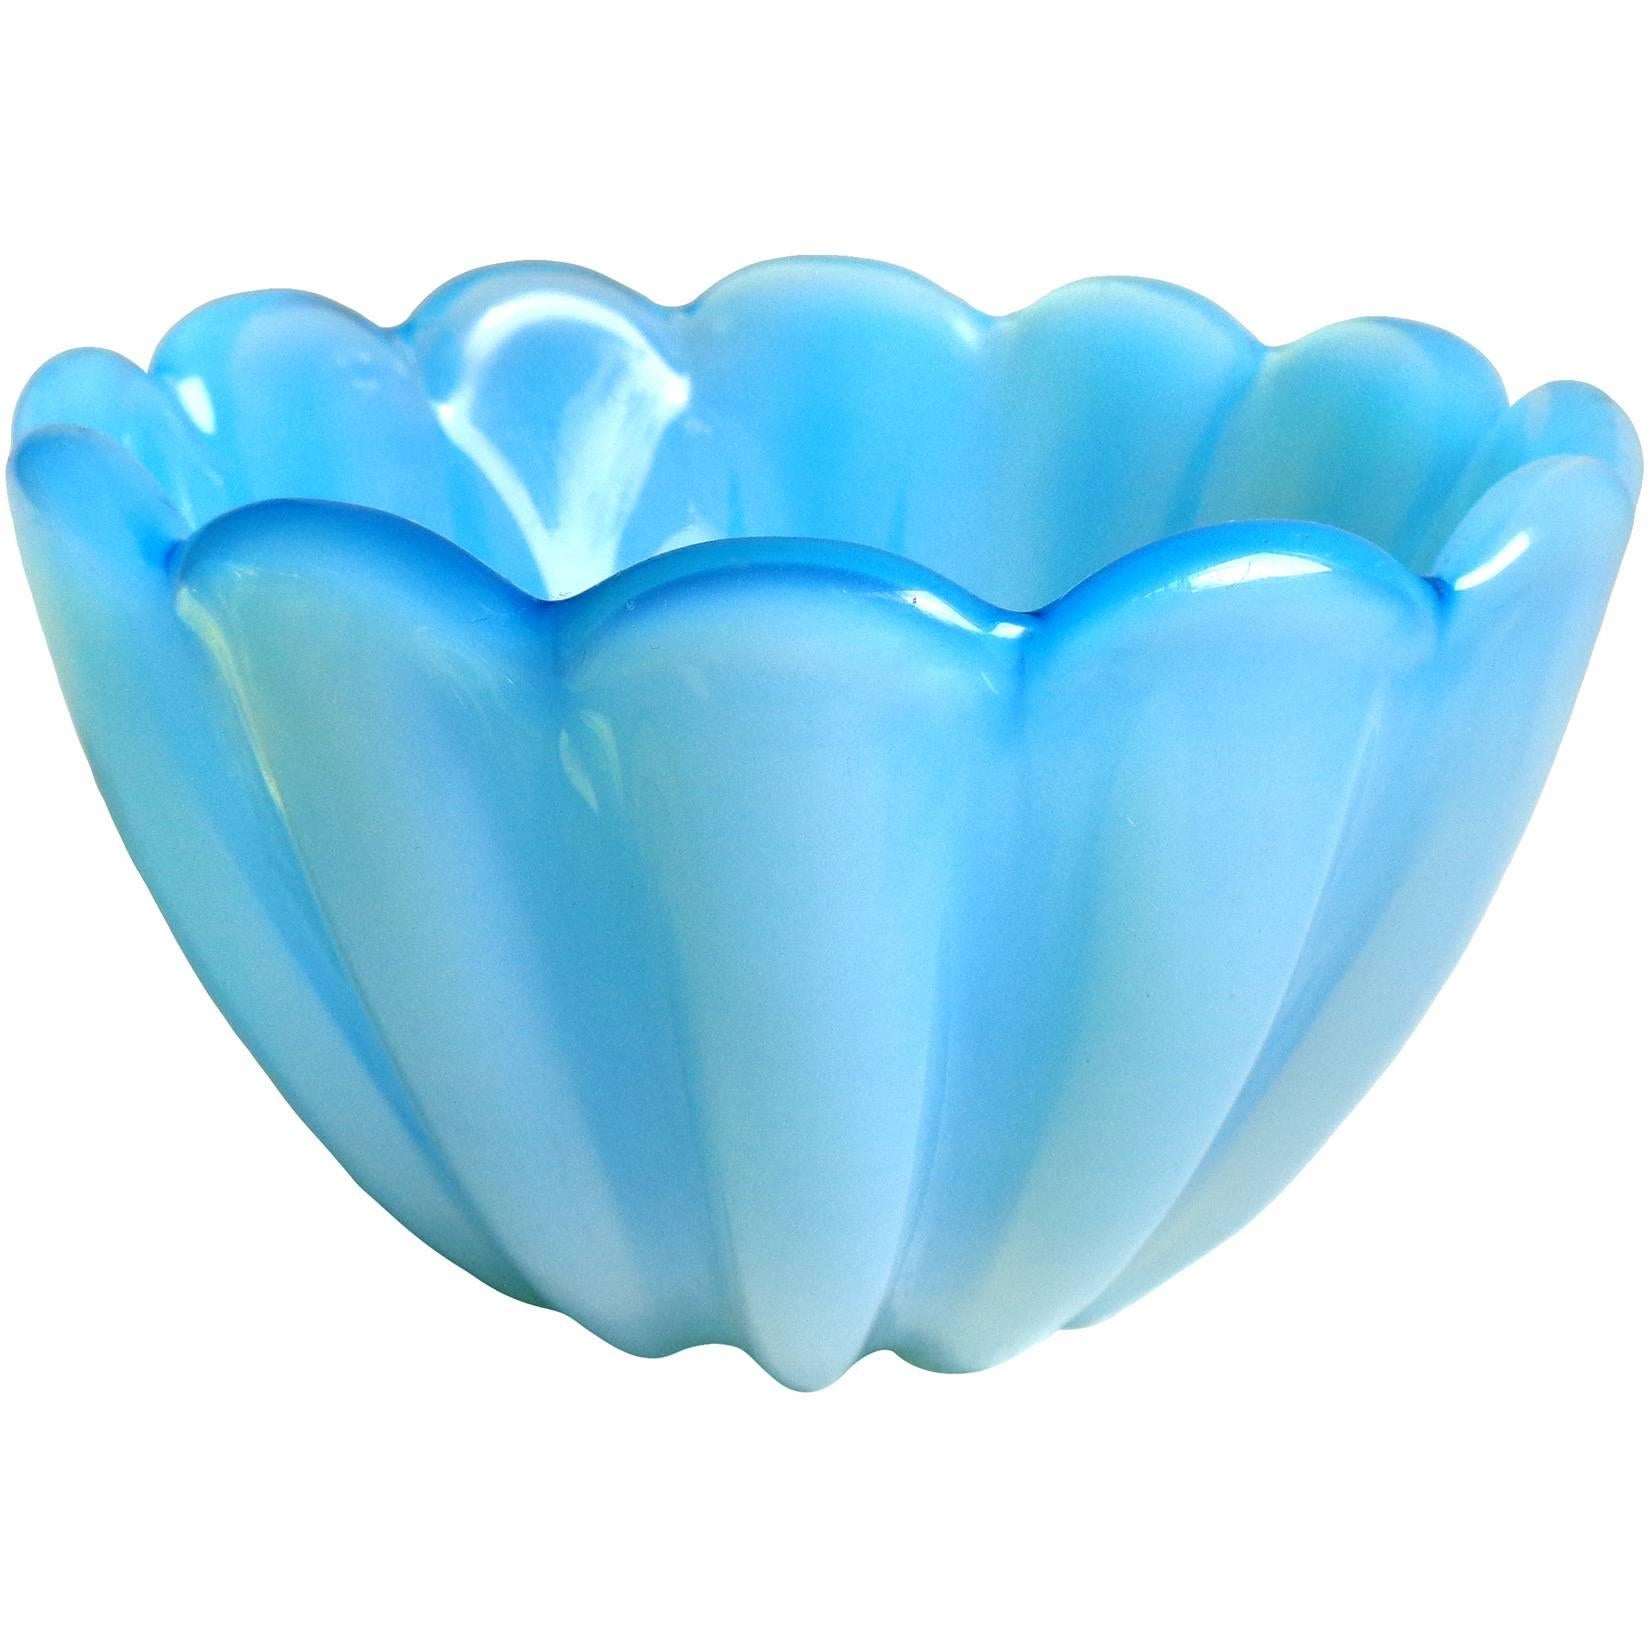 Fratelli Toso Murano Blue Opalescent Italian Art Glass Candy Bowl Dish